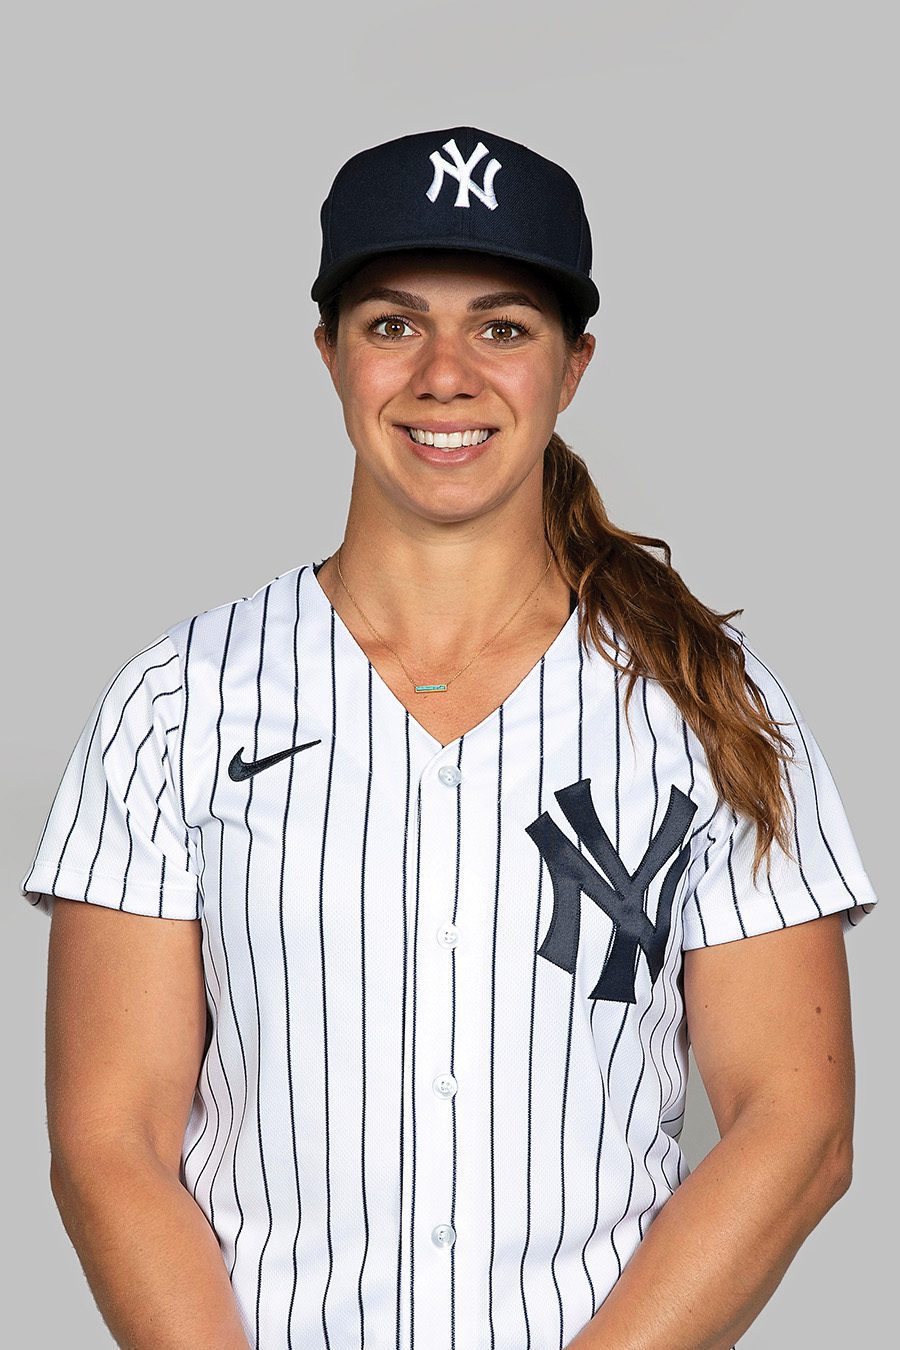 Rachel Balkovec official shot in Yankees uniform